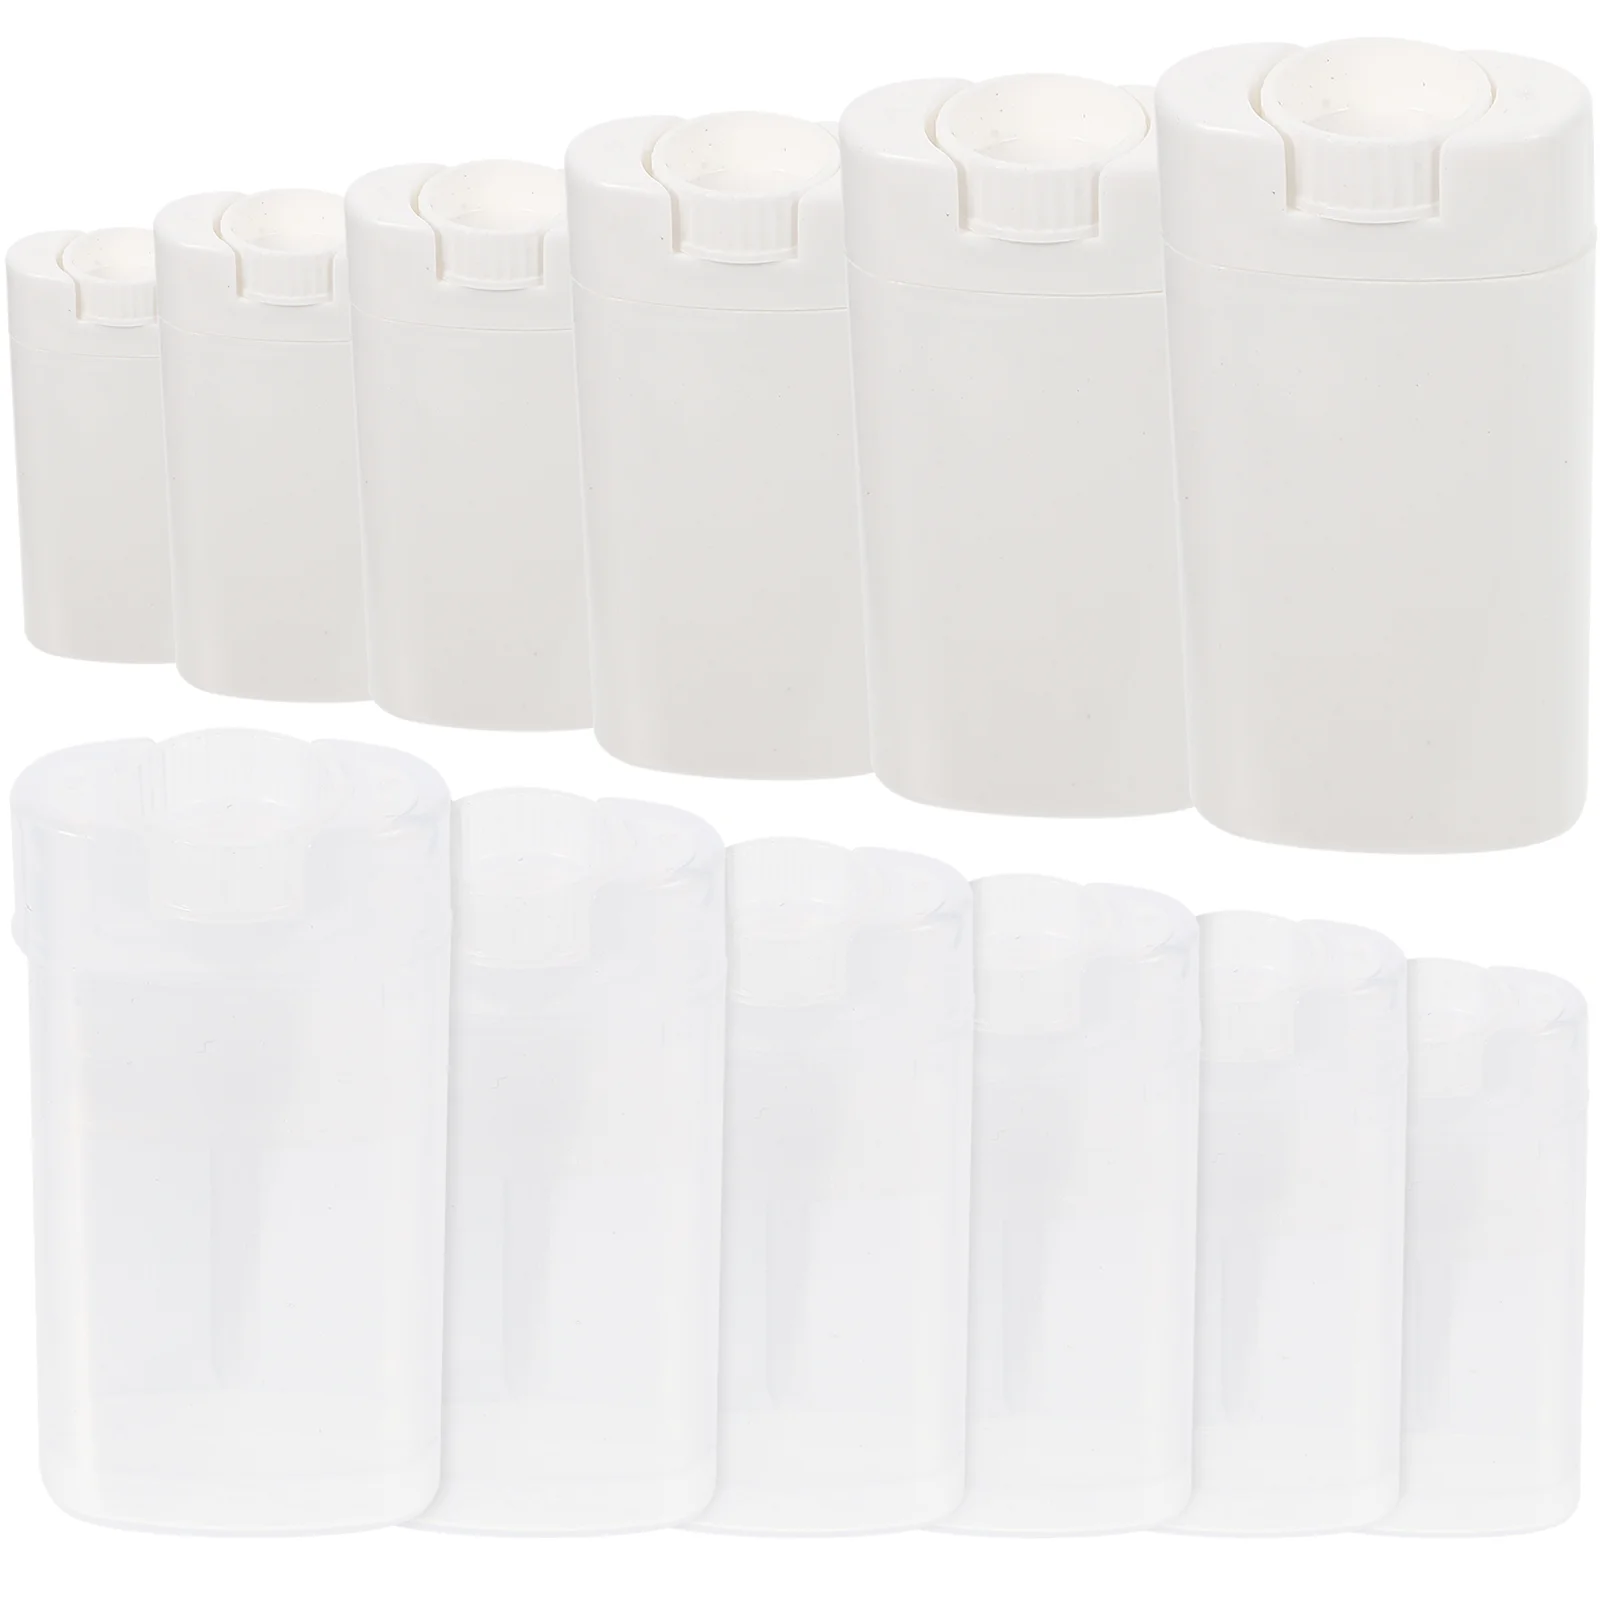 

12 Pcs Round Deodorant Cream Bottle Travel Eliminator Home Containers Toiletries Pp Essential Bottles